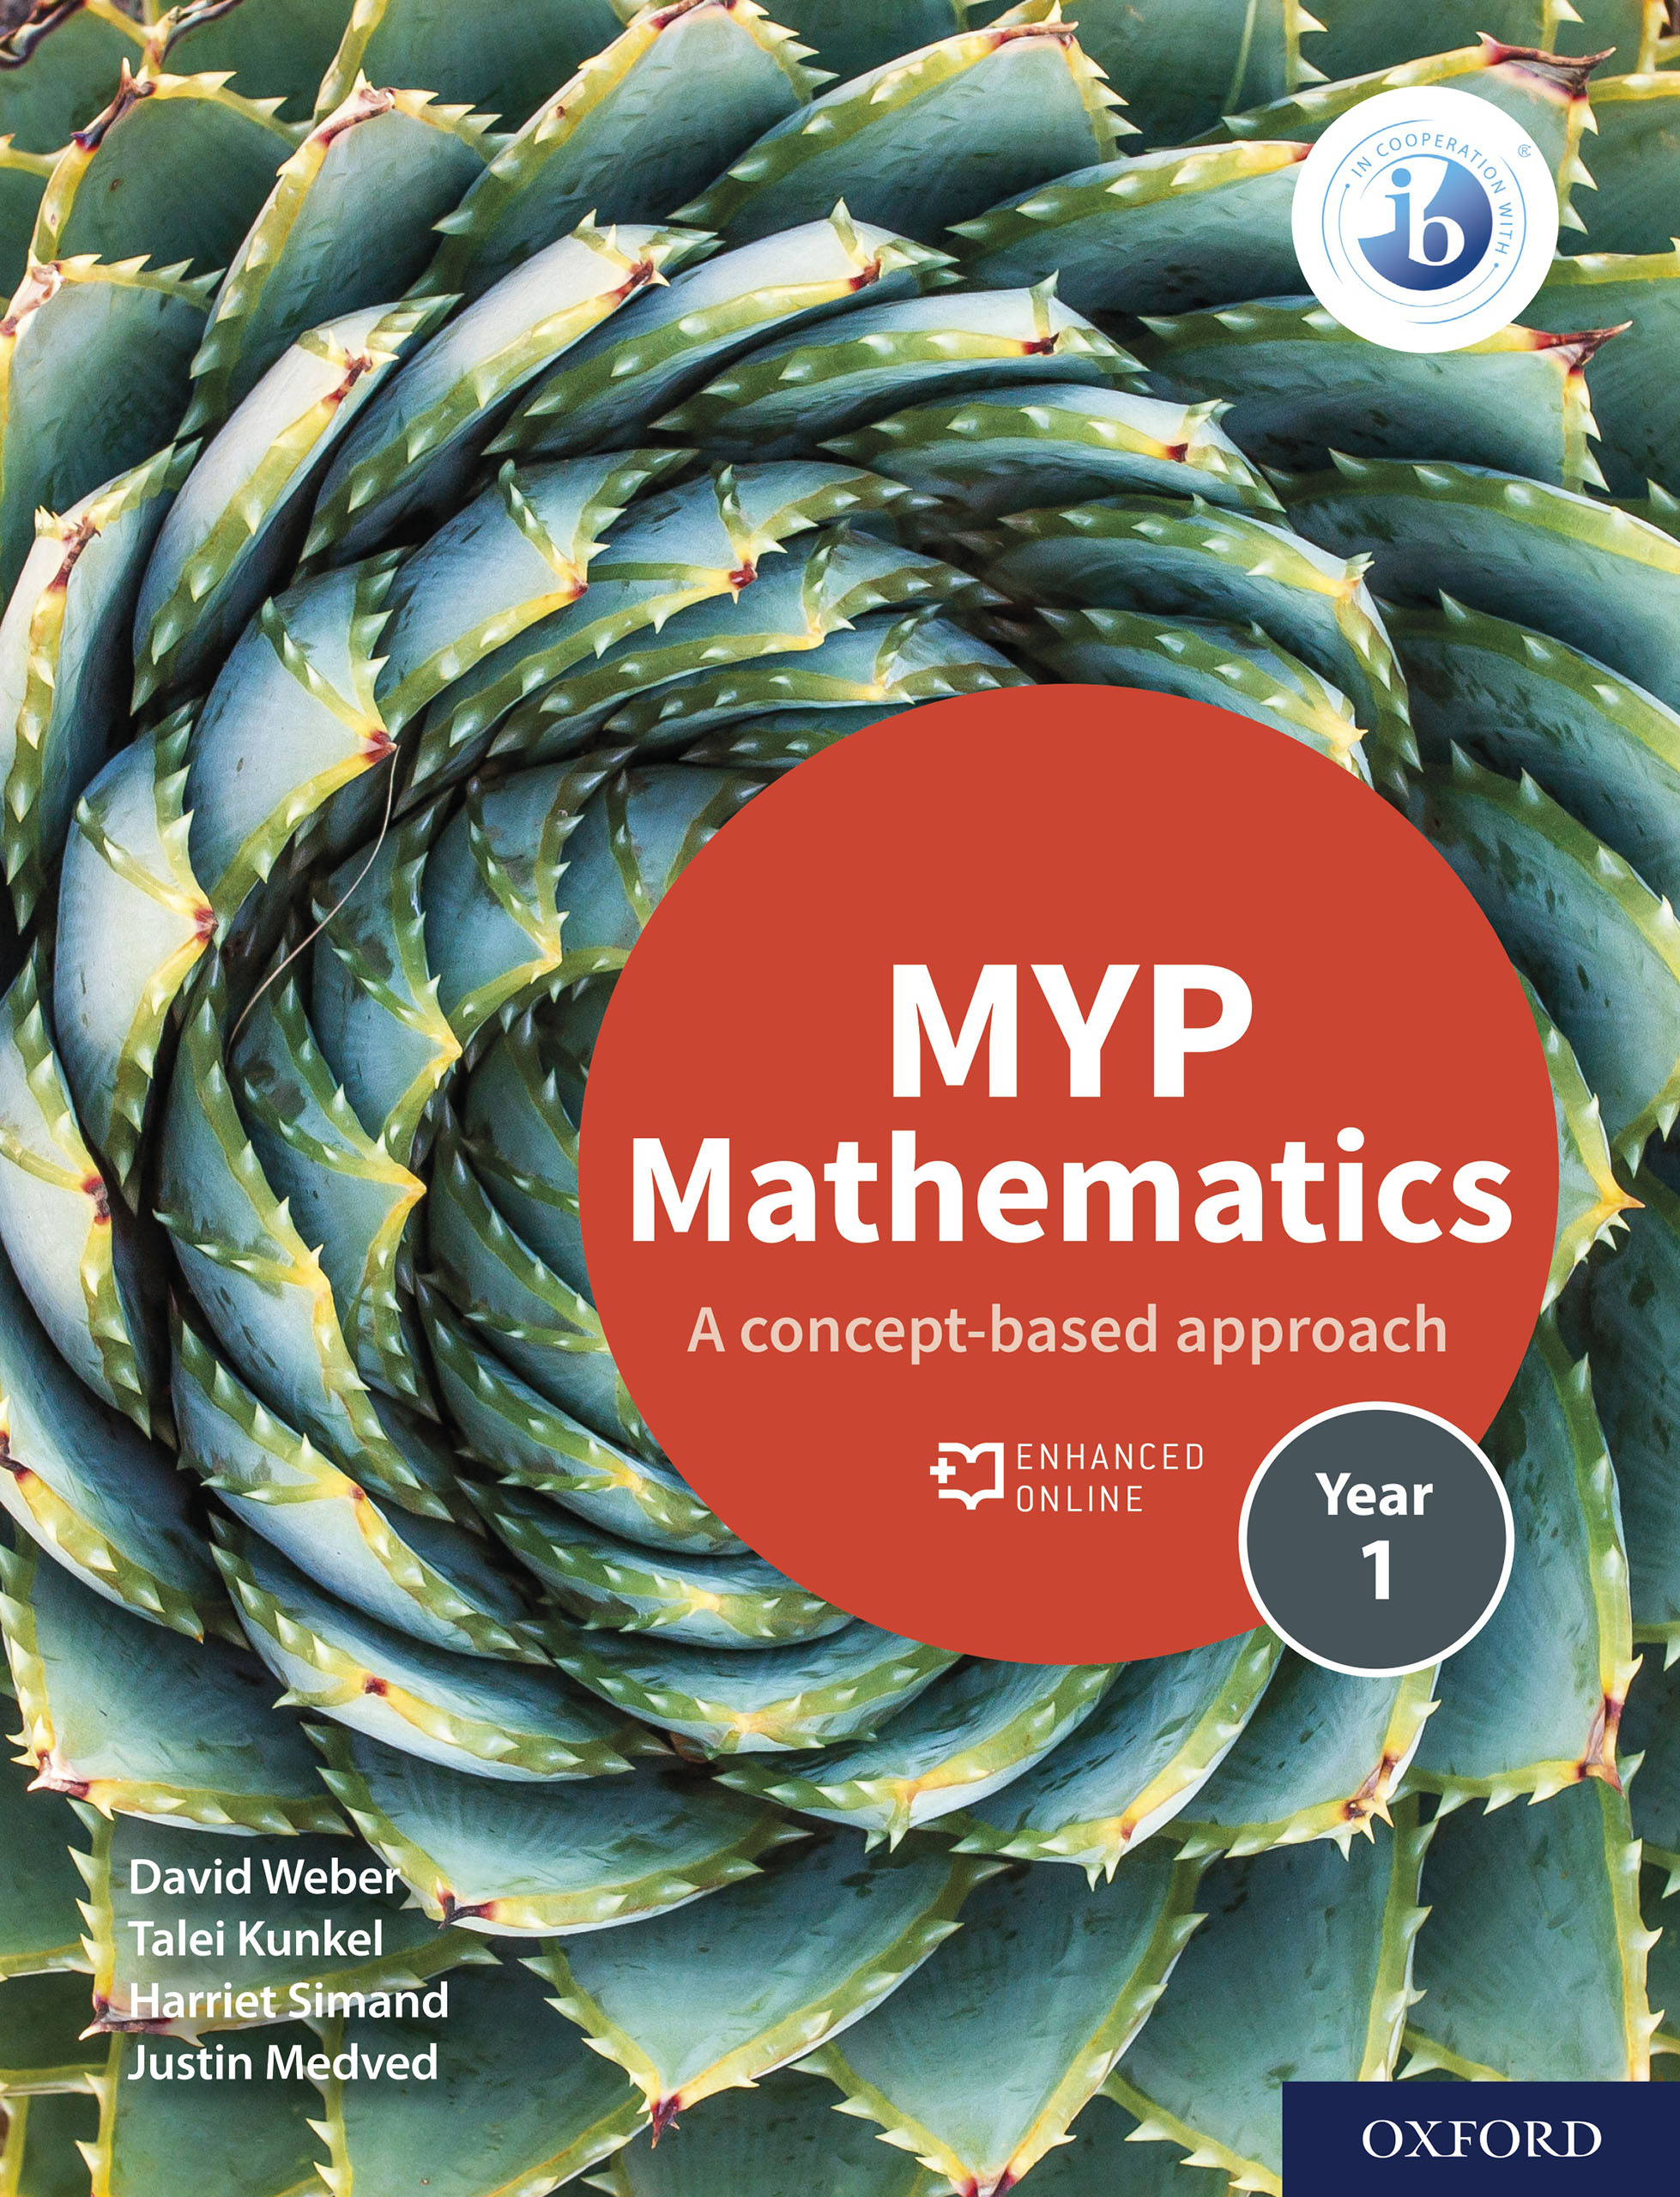 pdf-ebook-oxford-ib-myp-mathematics-1-interesedu